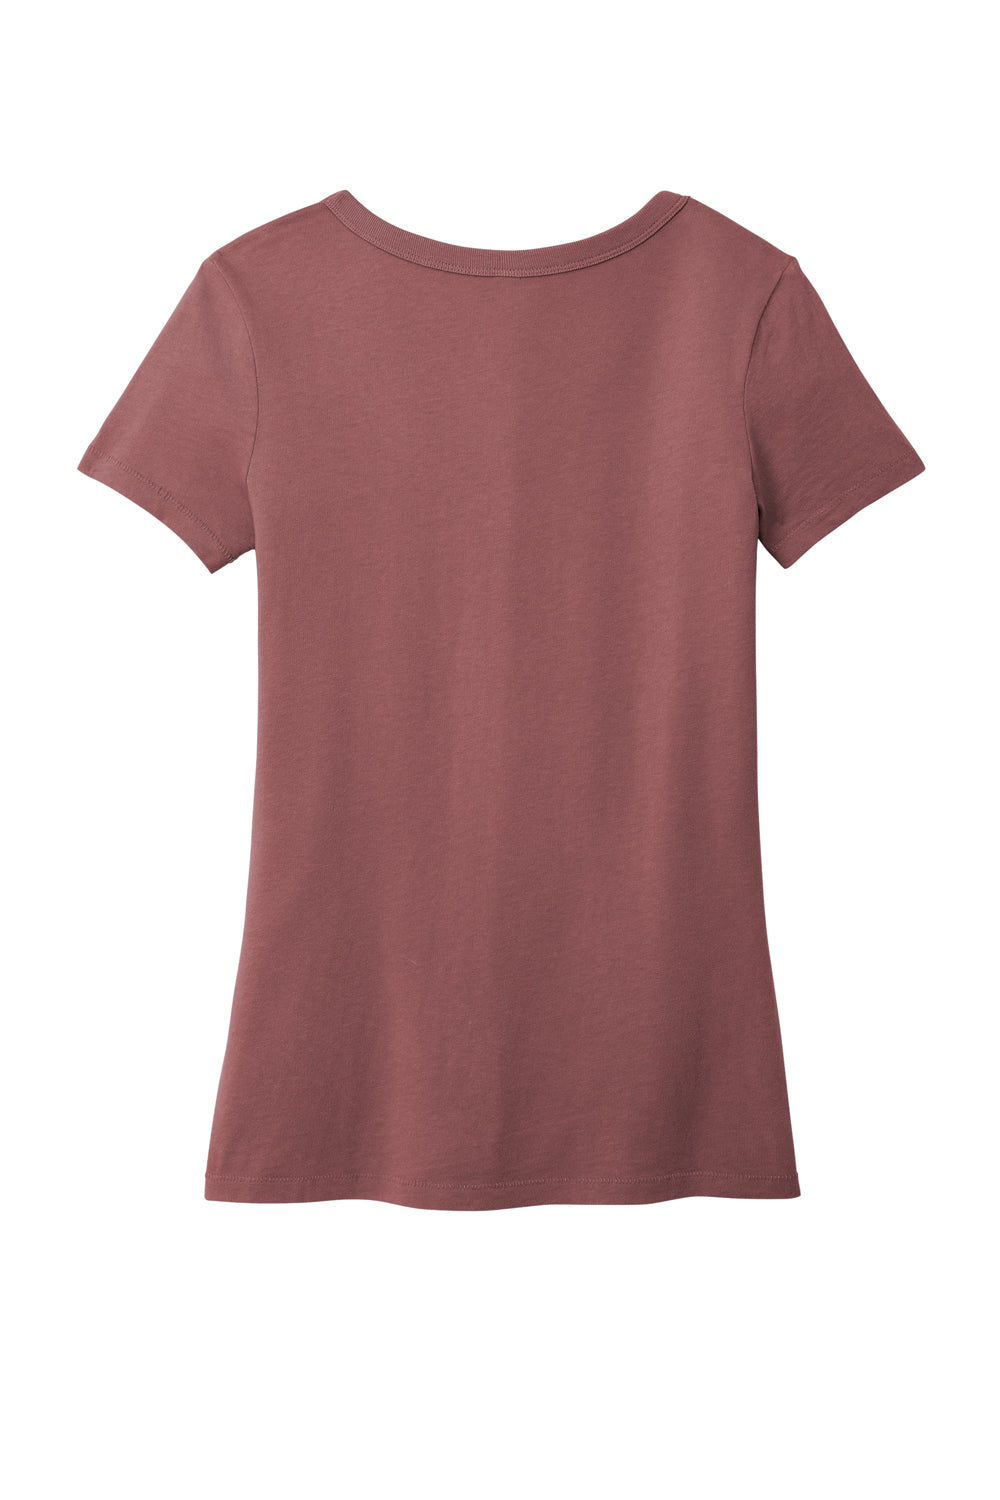 Port & Company LPC099V Womens Beach Wash Garment Dyed Short Sleeve V-Neck T-Shirt Nostalgia Rose Flat Back